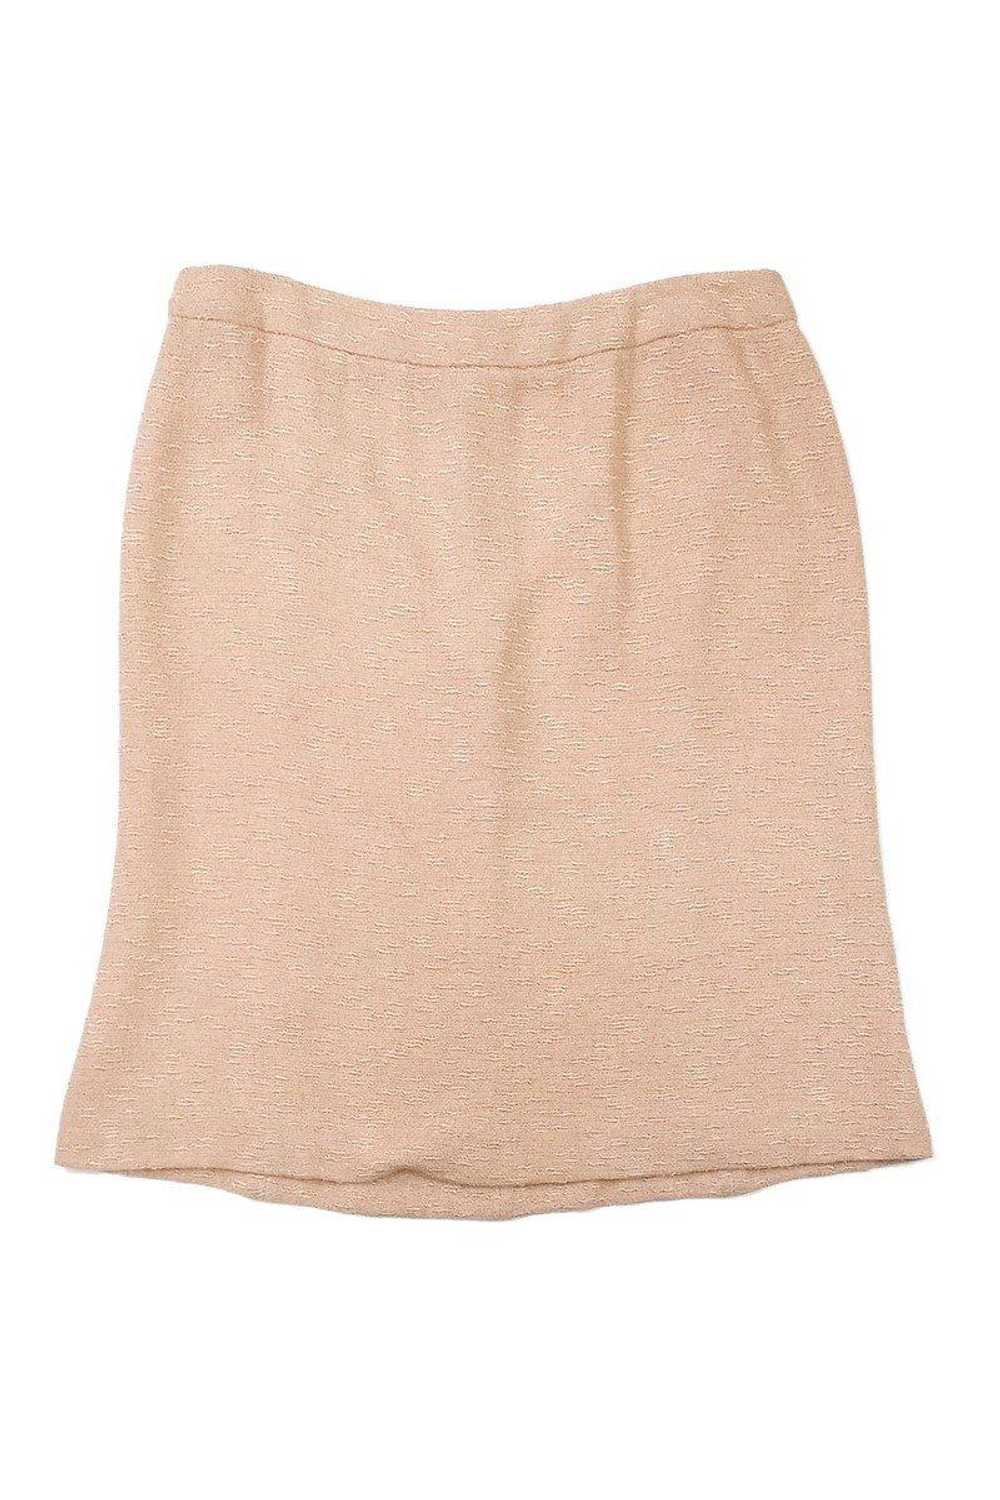 Moschino - Blush Silk Blend Pencil Skirt Sz 10 - image 1